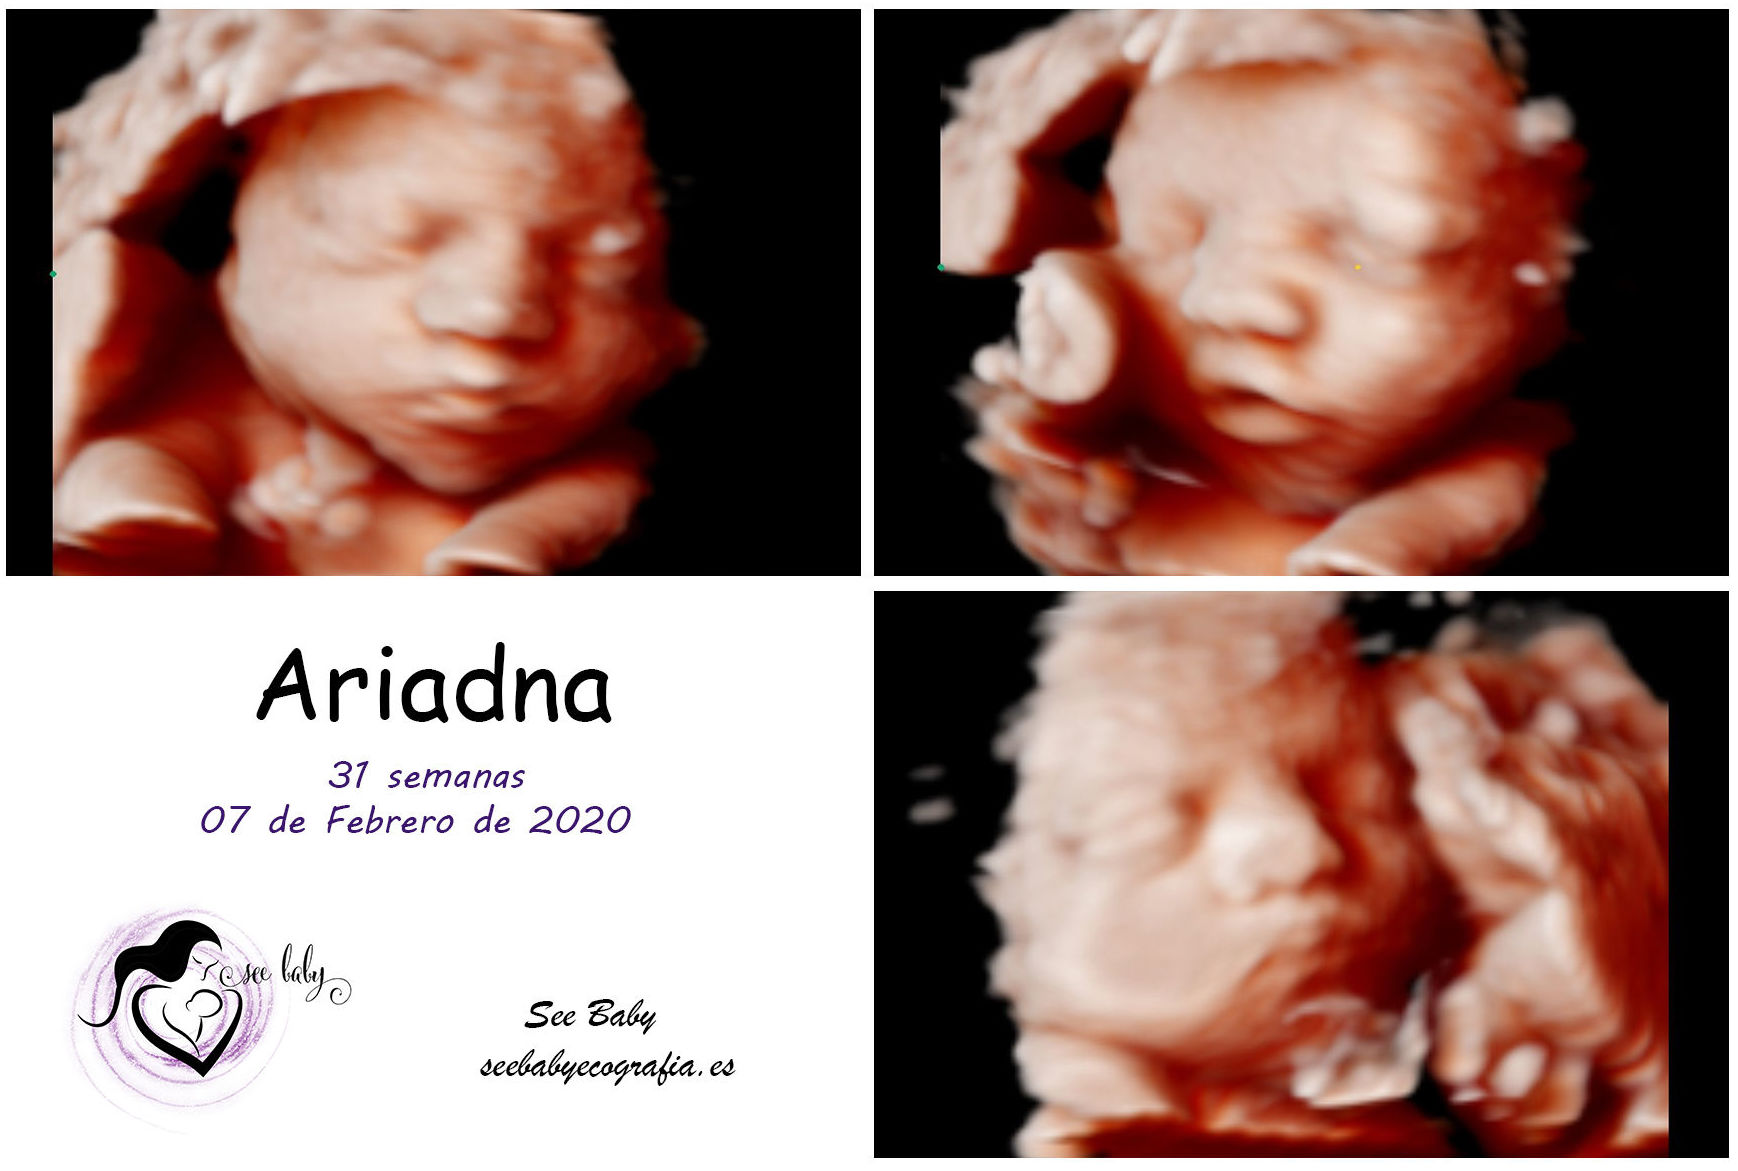 Querida Ariadna - Seebaby Ecografia 5D